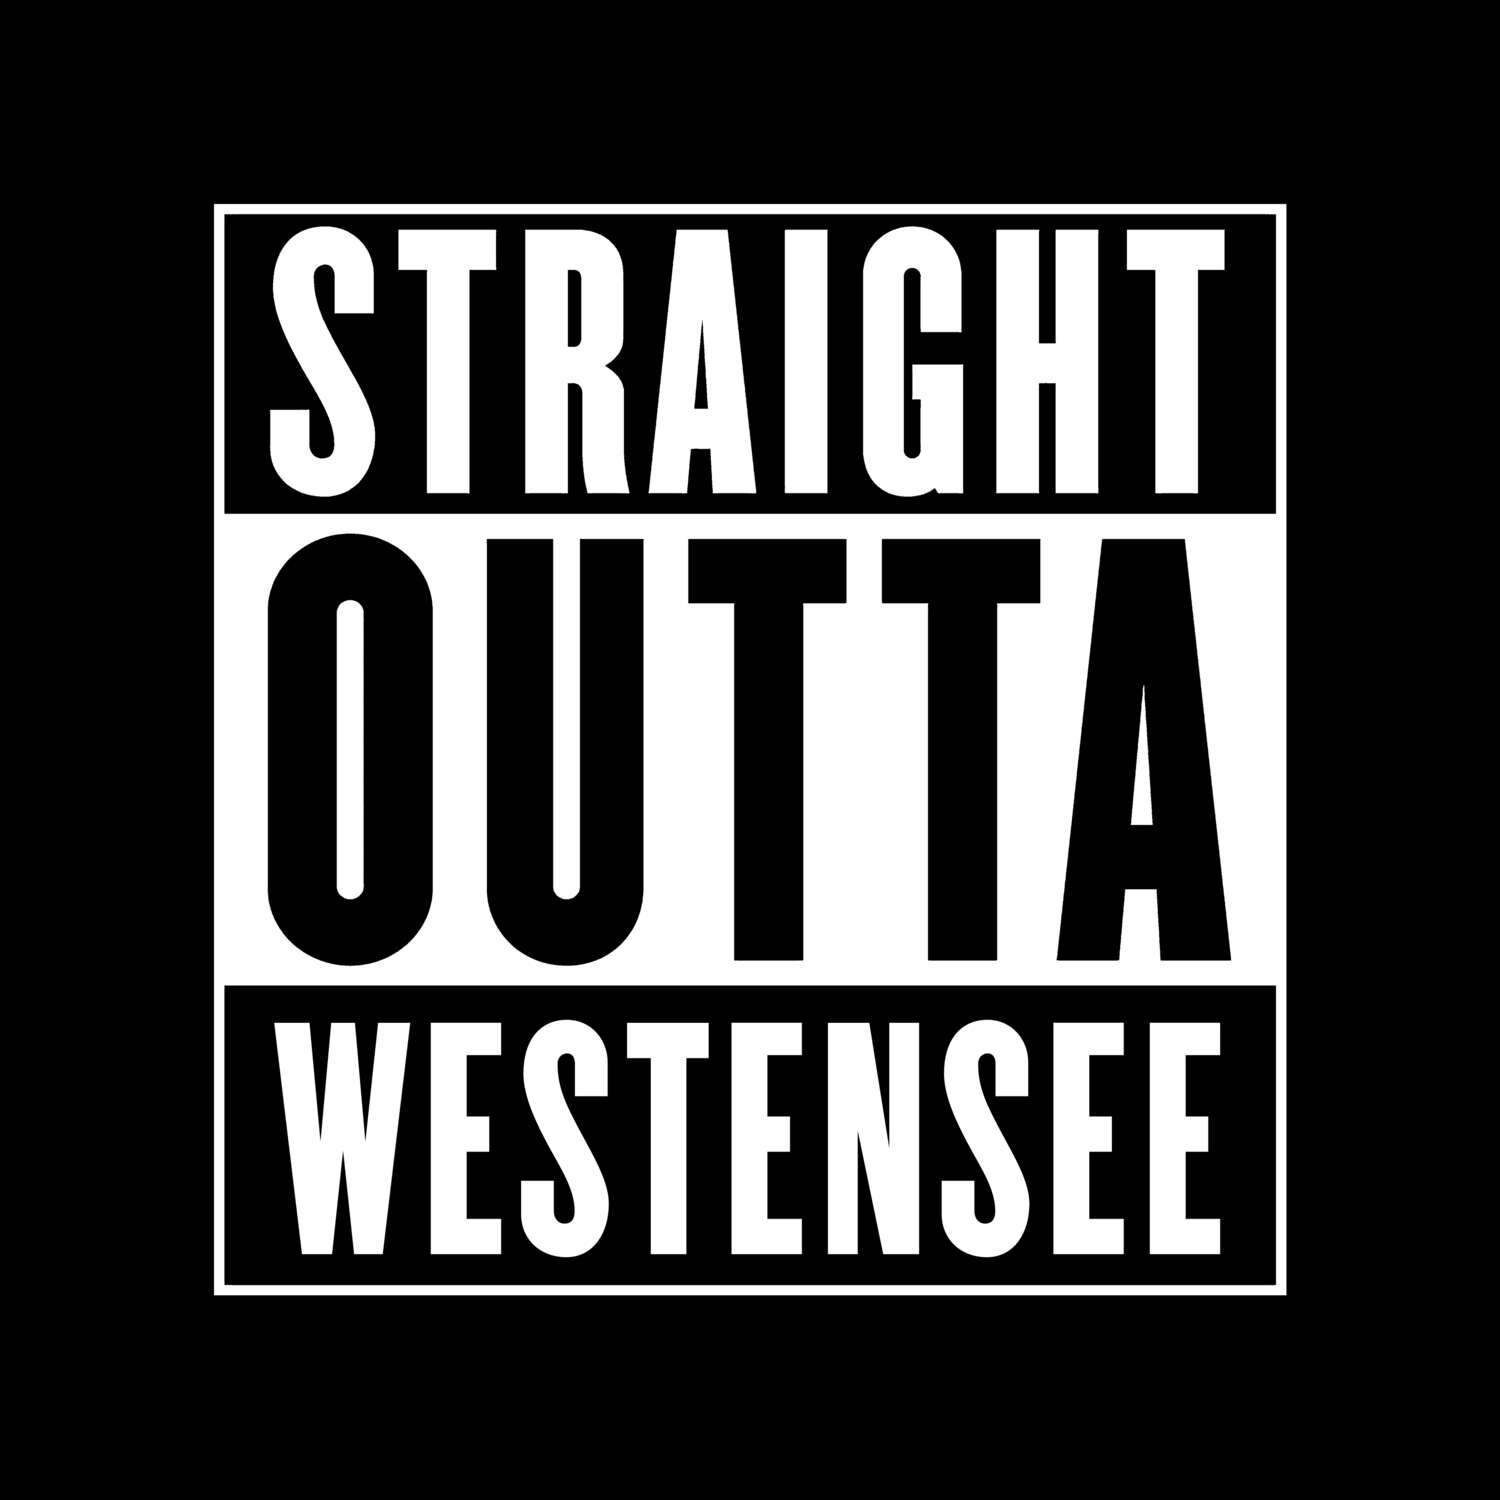 Westensee T-Shirt »Straight Outta«